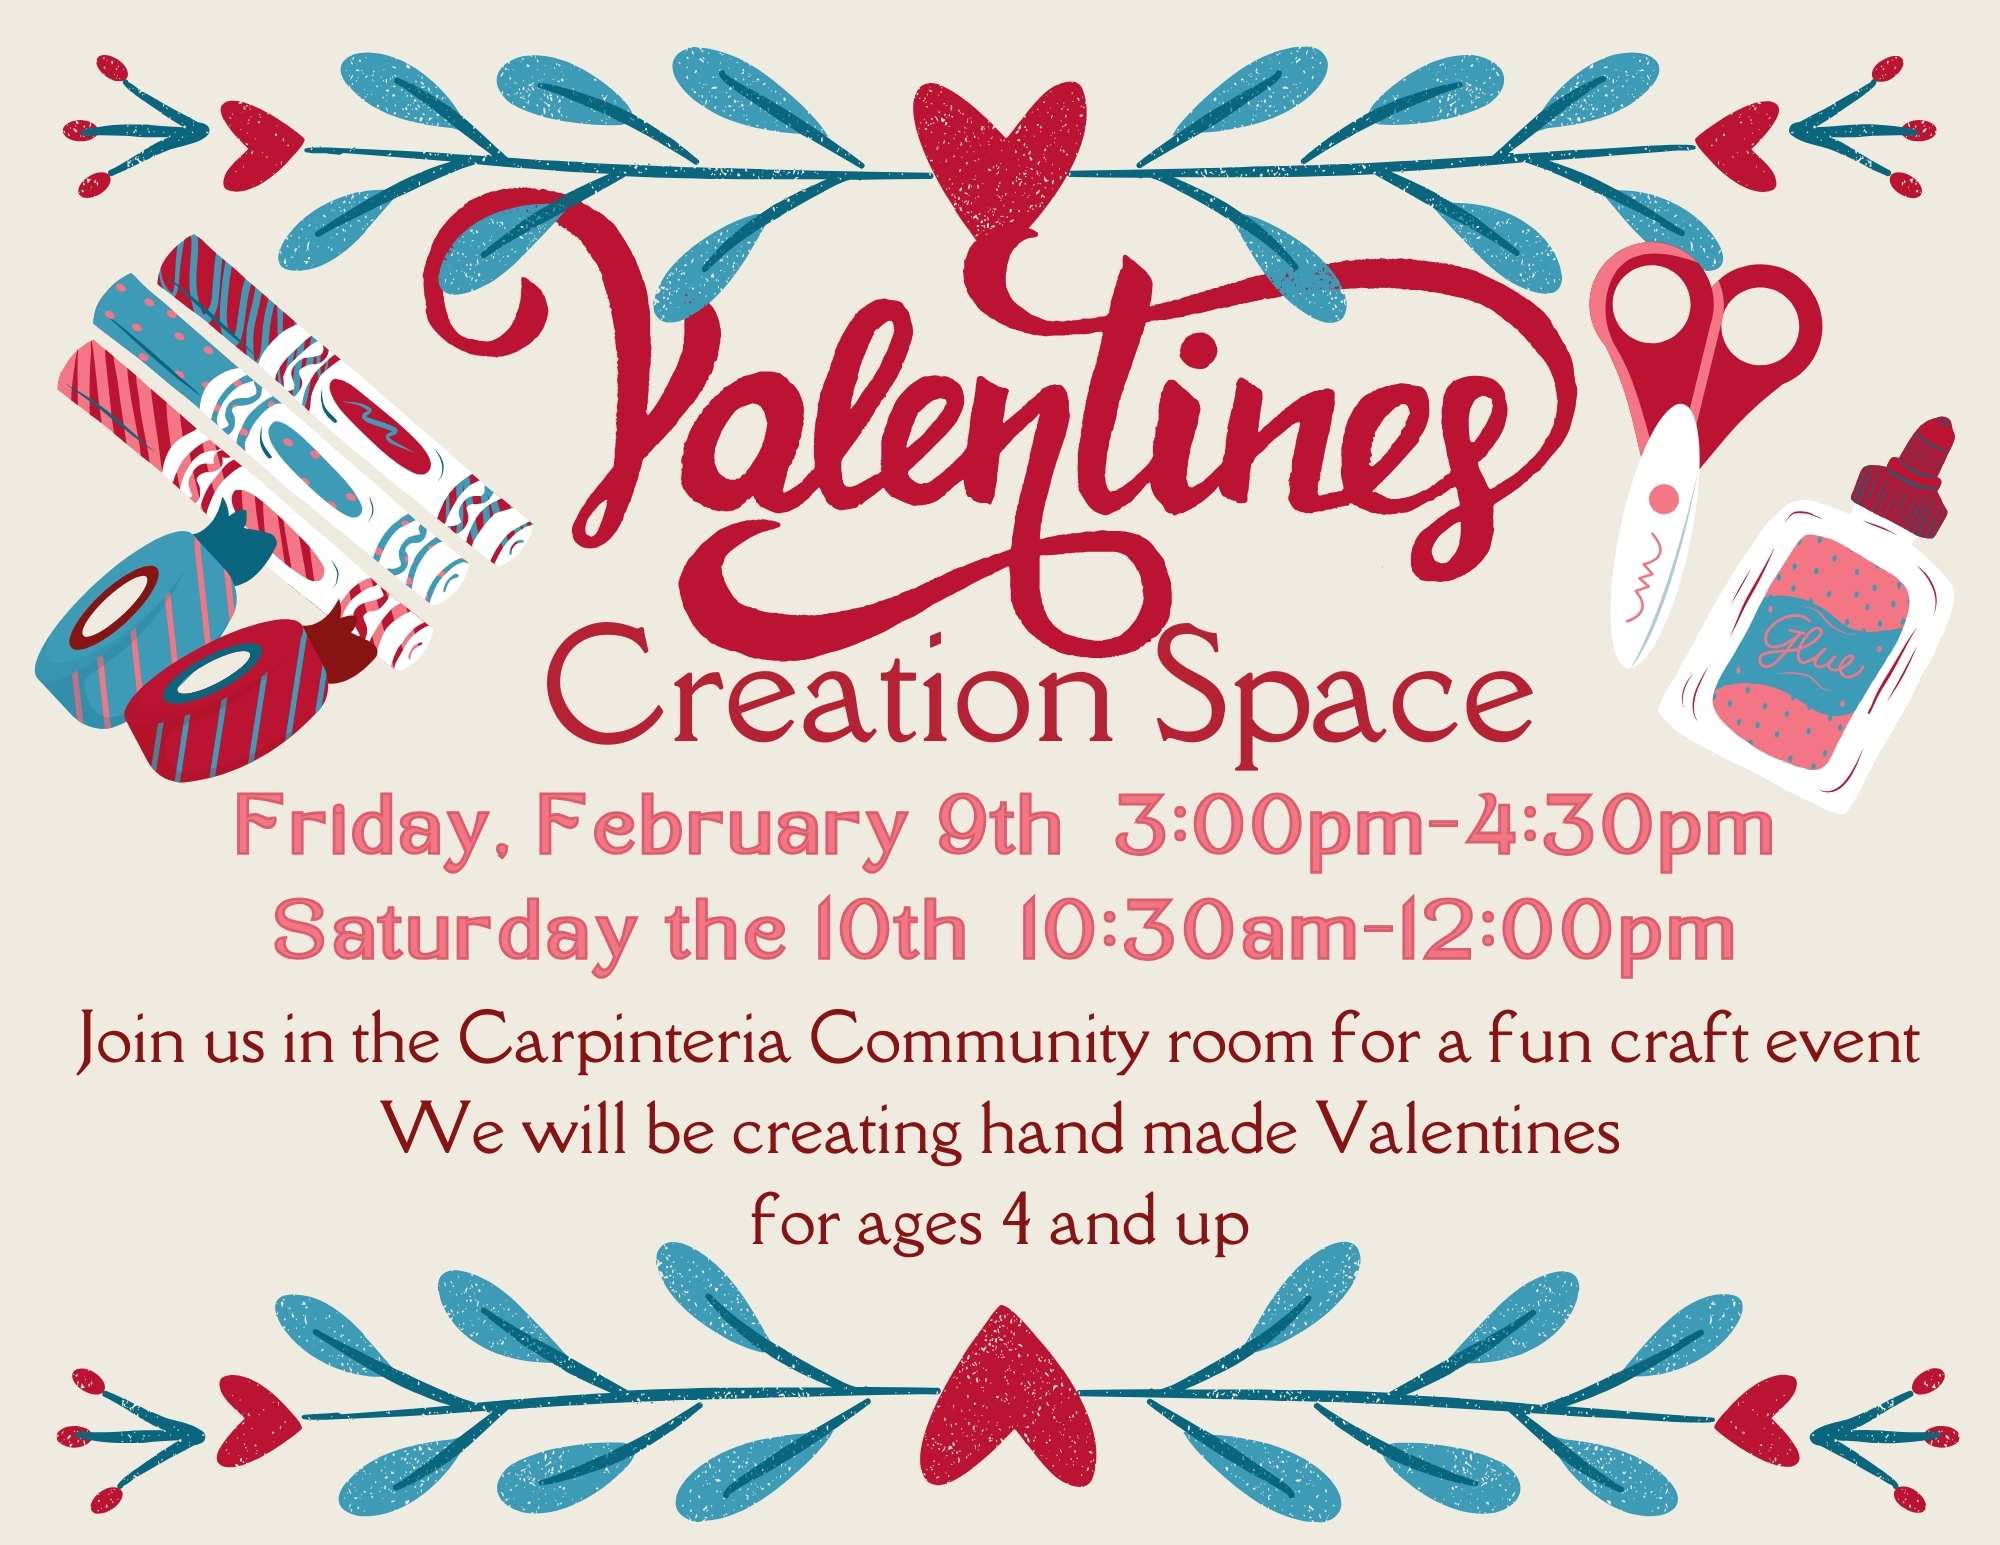 Valentines Creation Space